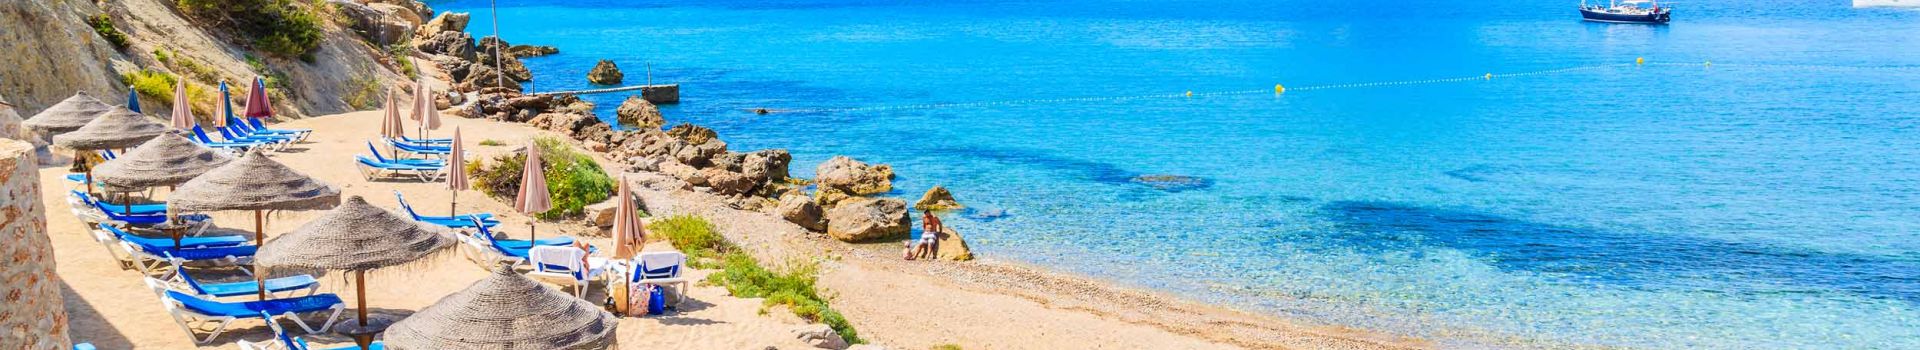 Cheap holidays to Ibiza with Cassidy Travel